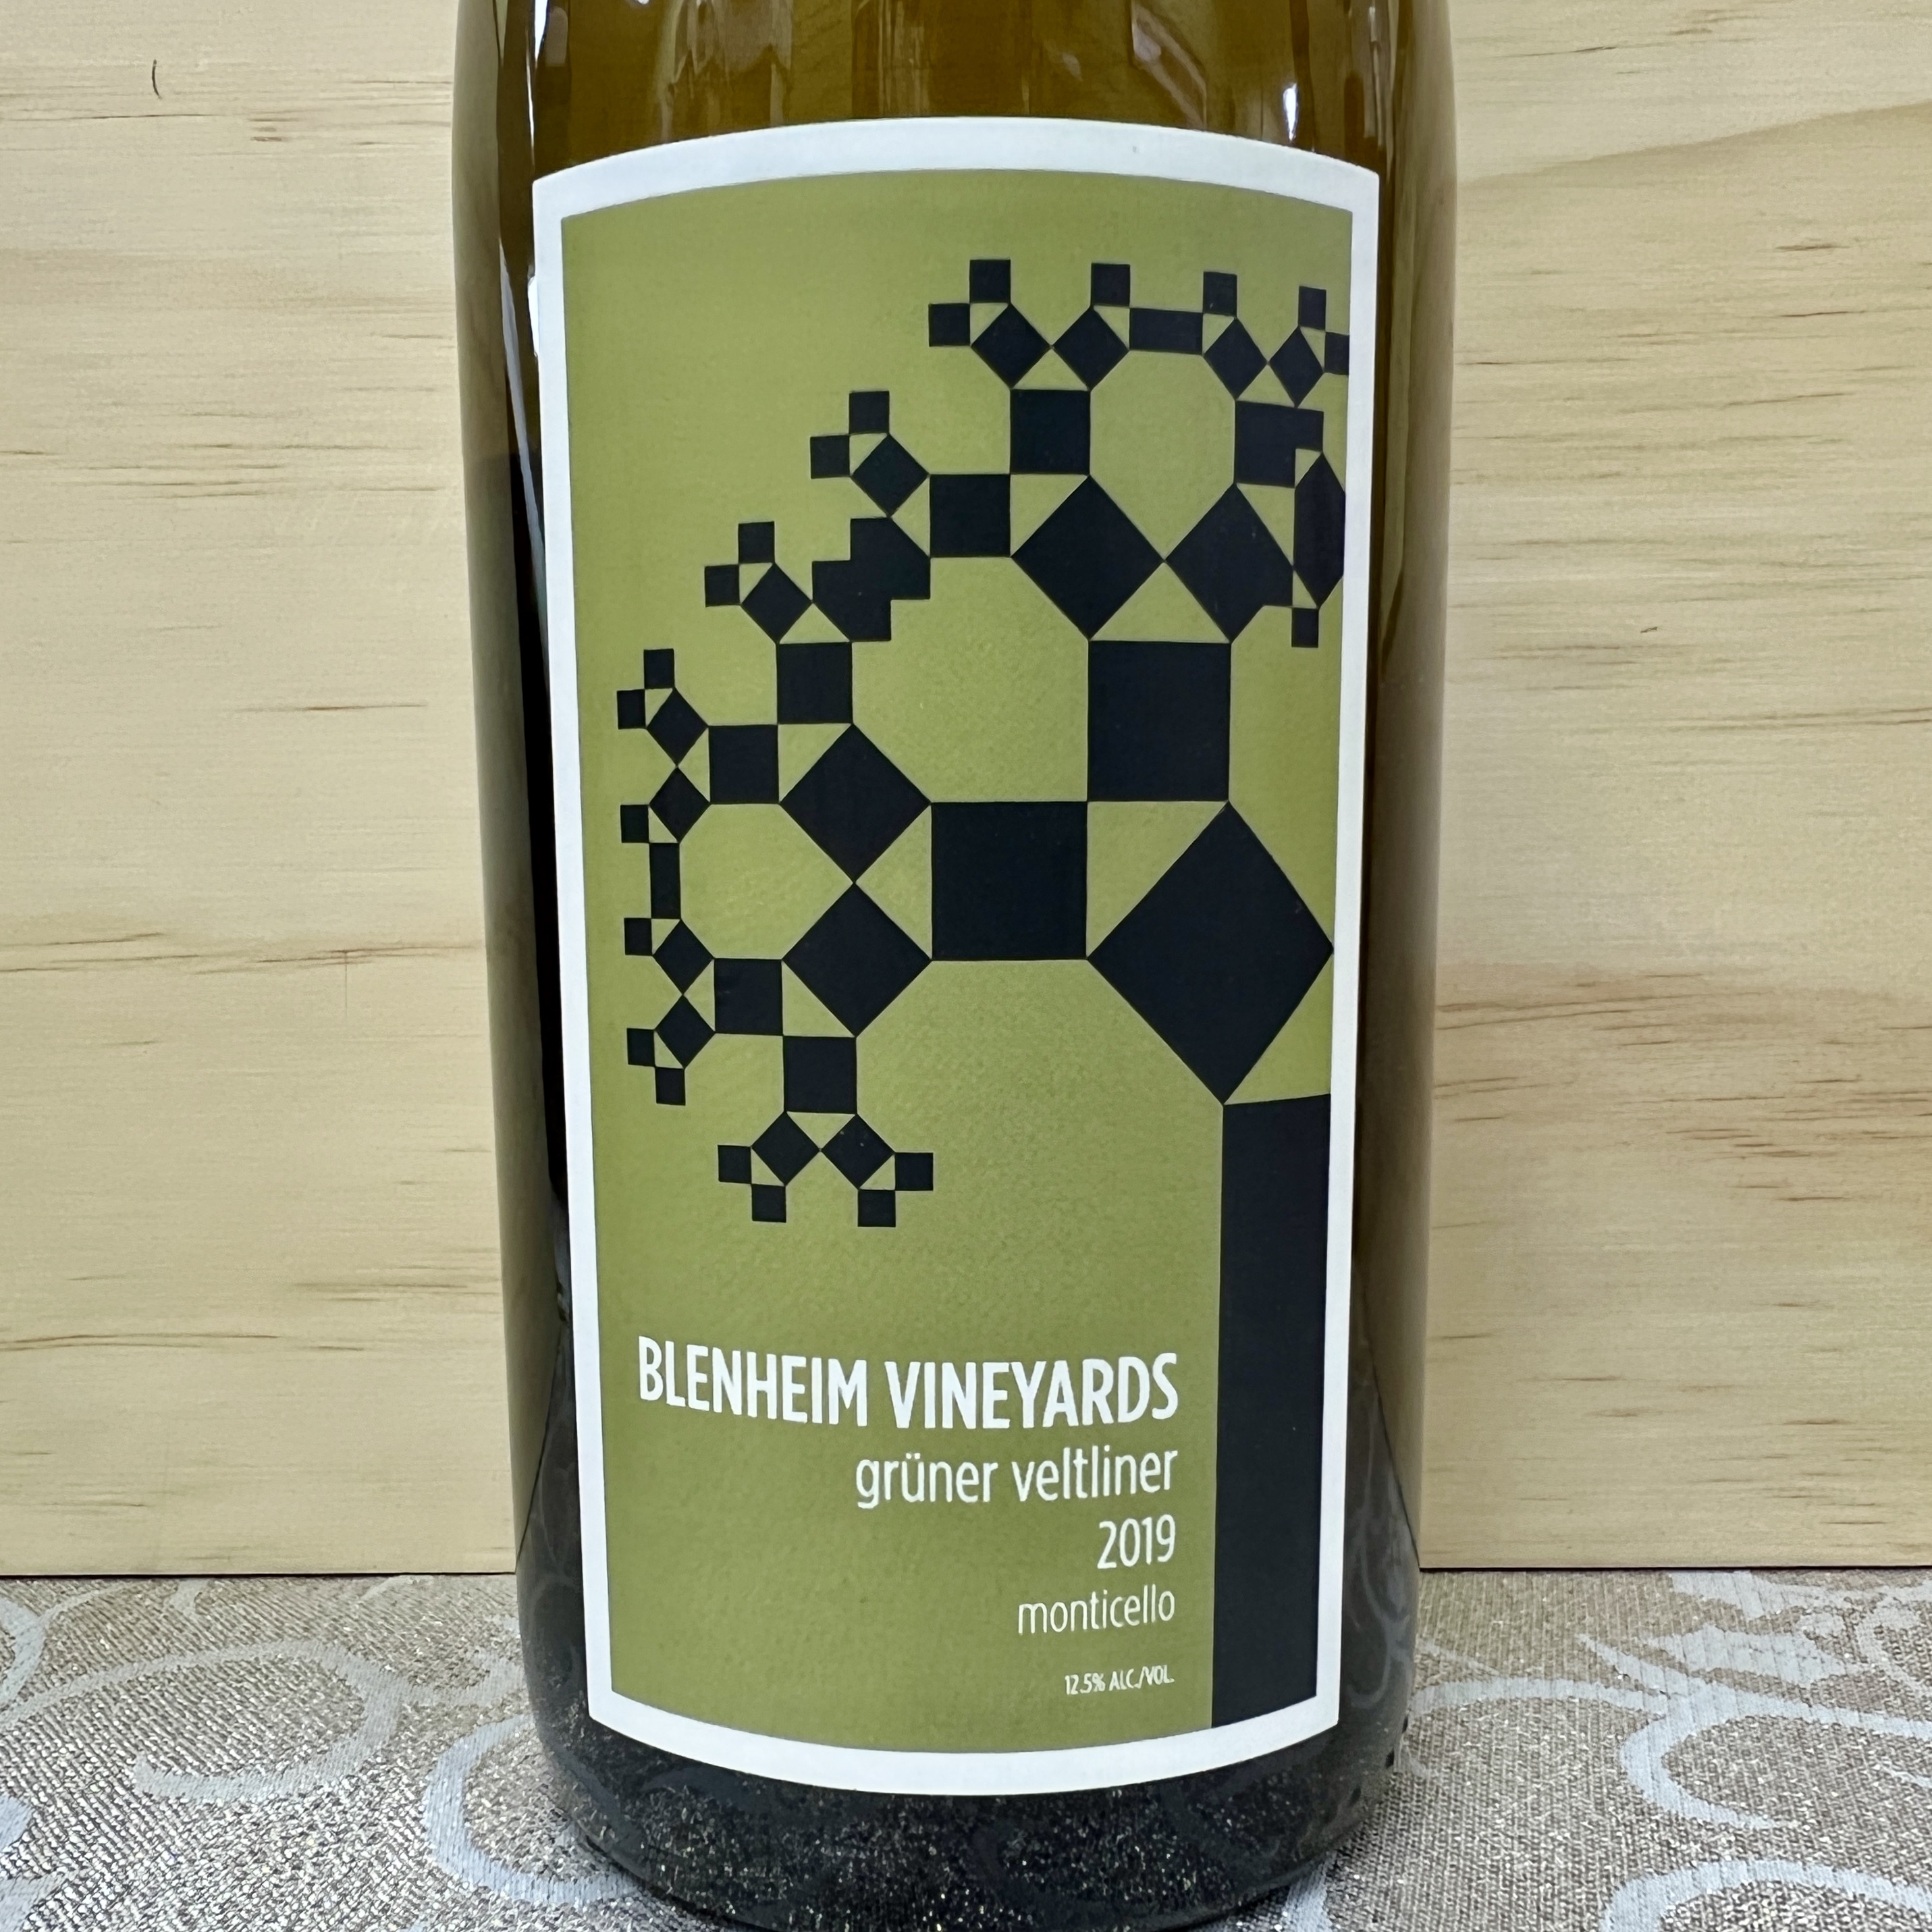 Blenheim Vineyards Gruner Veltliner Monticello 2019